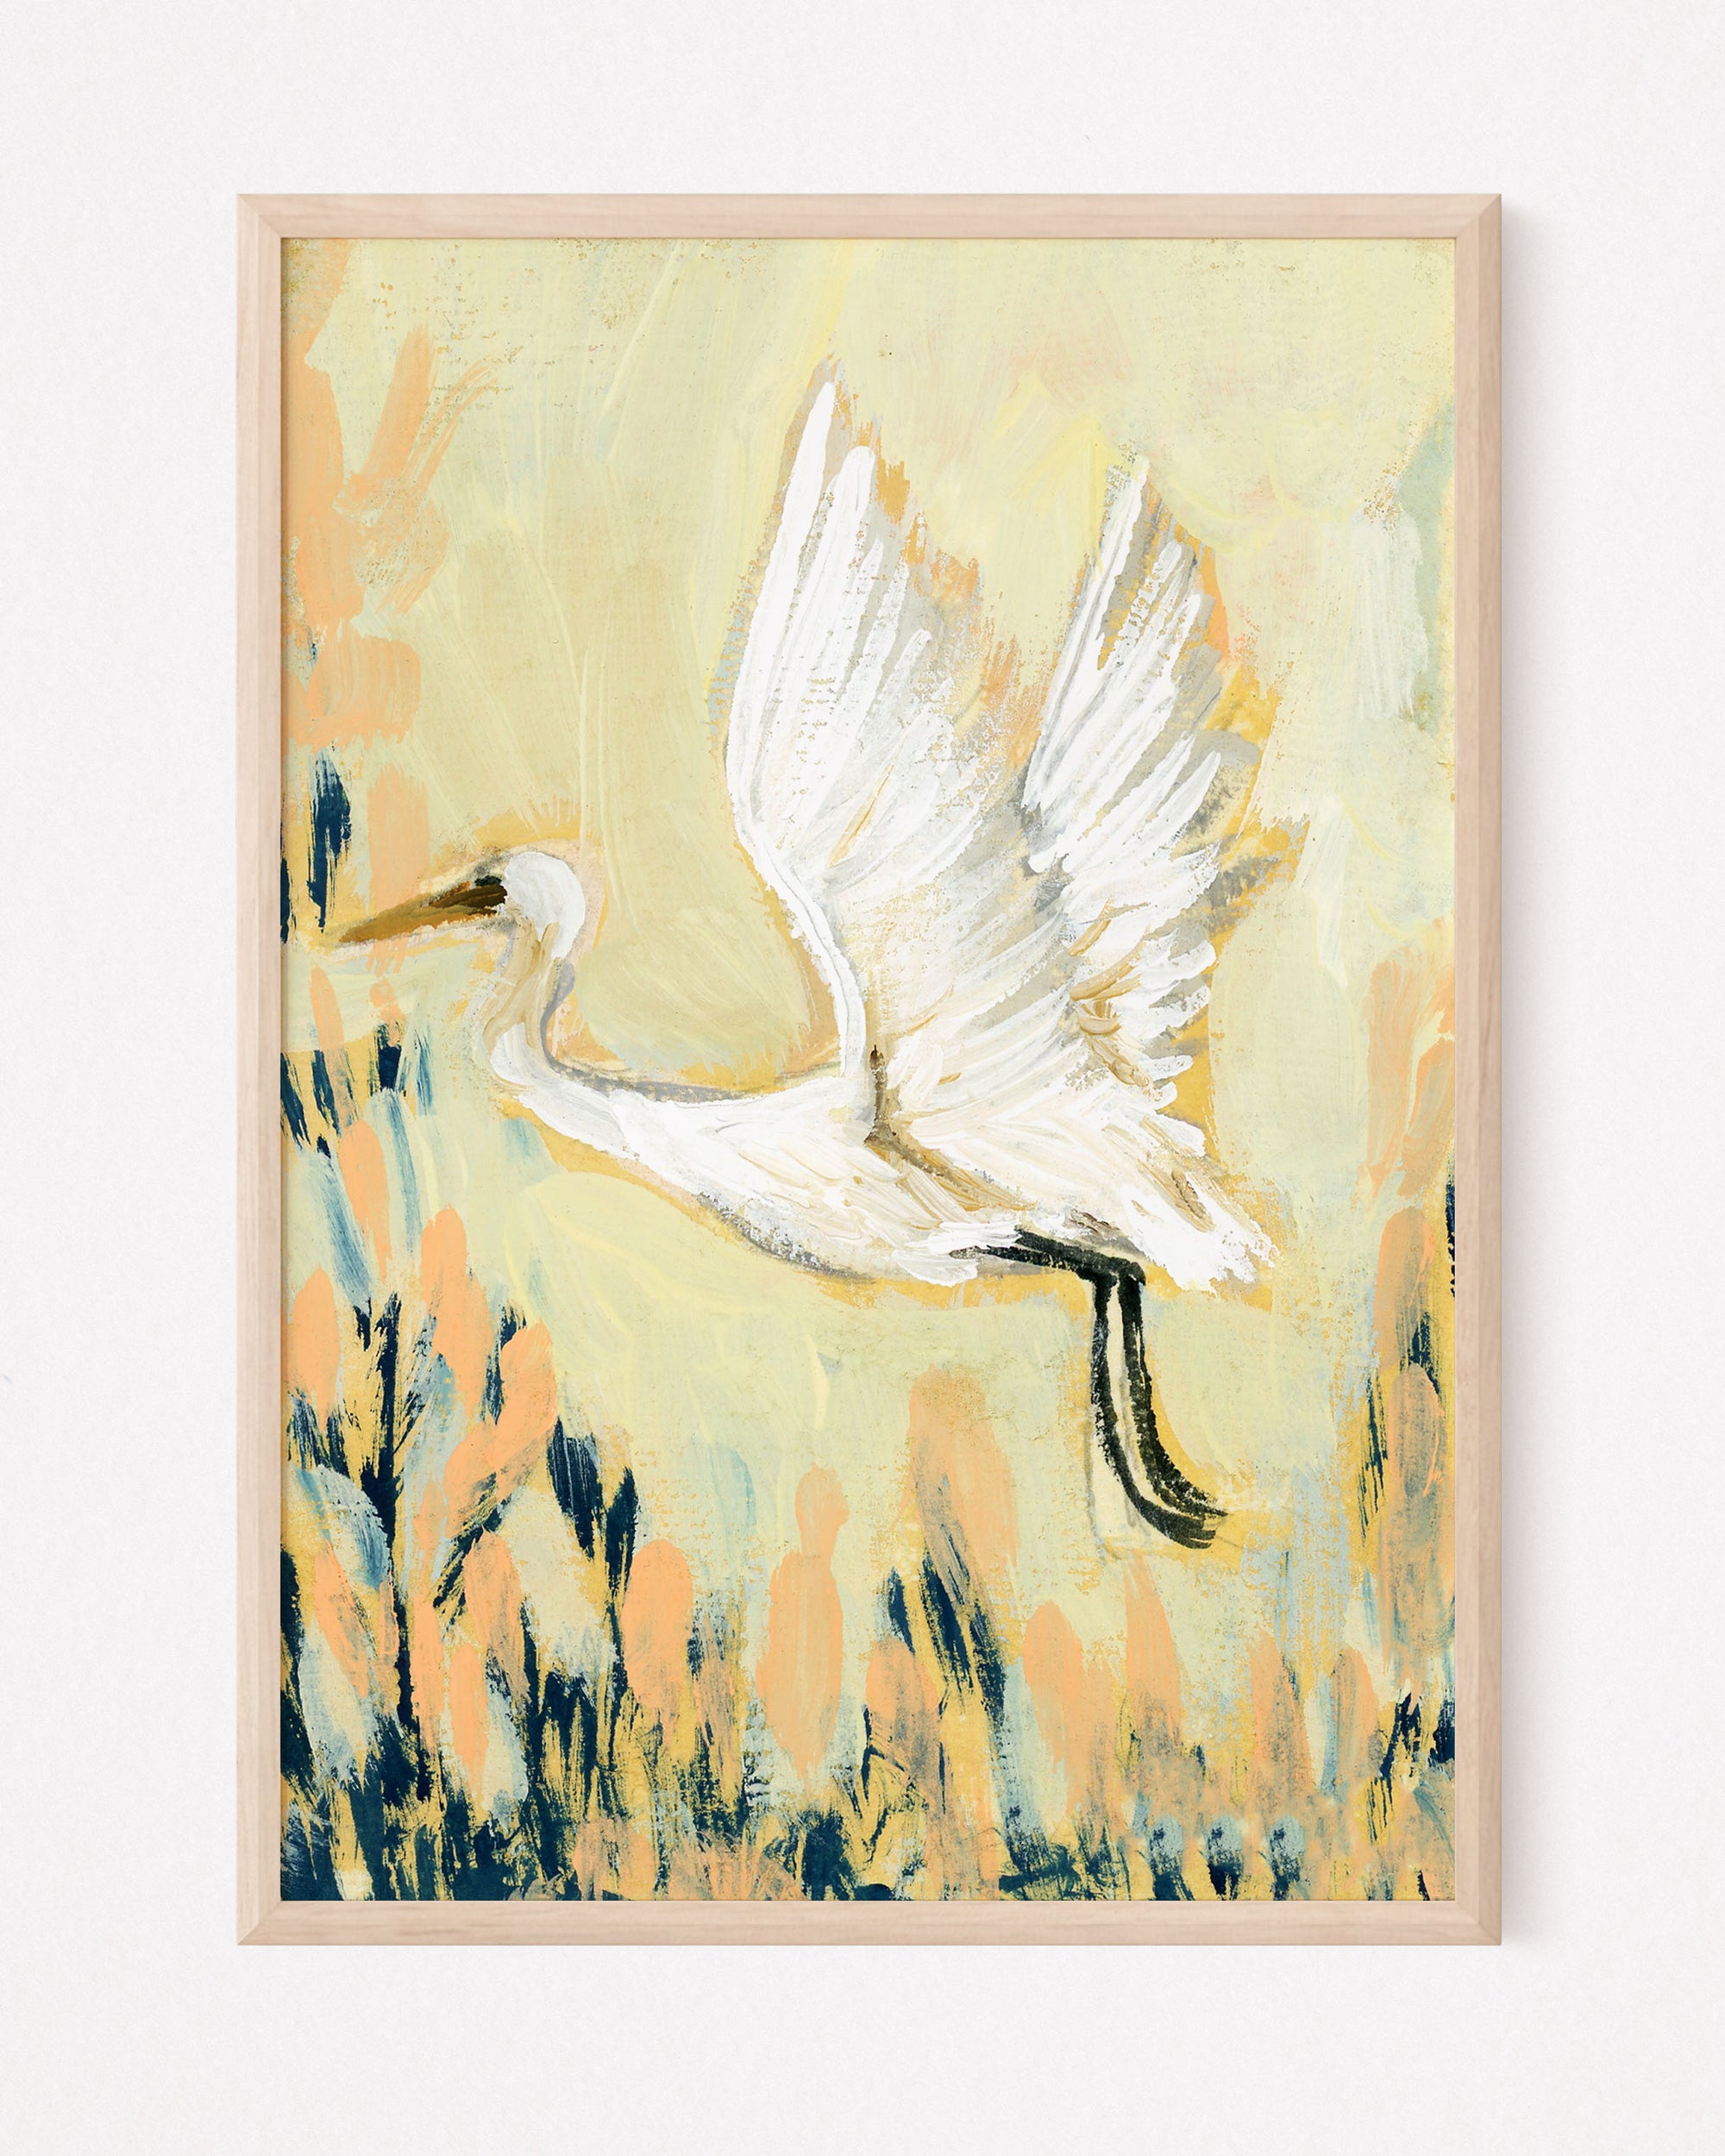 Lulu White Egret, a Vertical Print